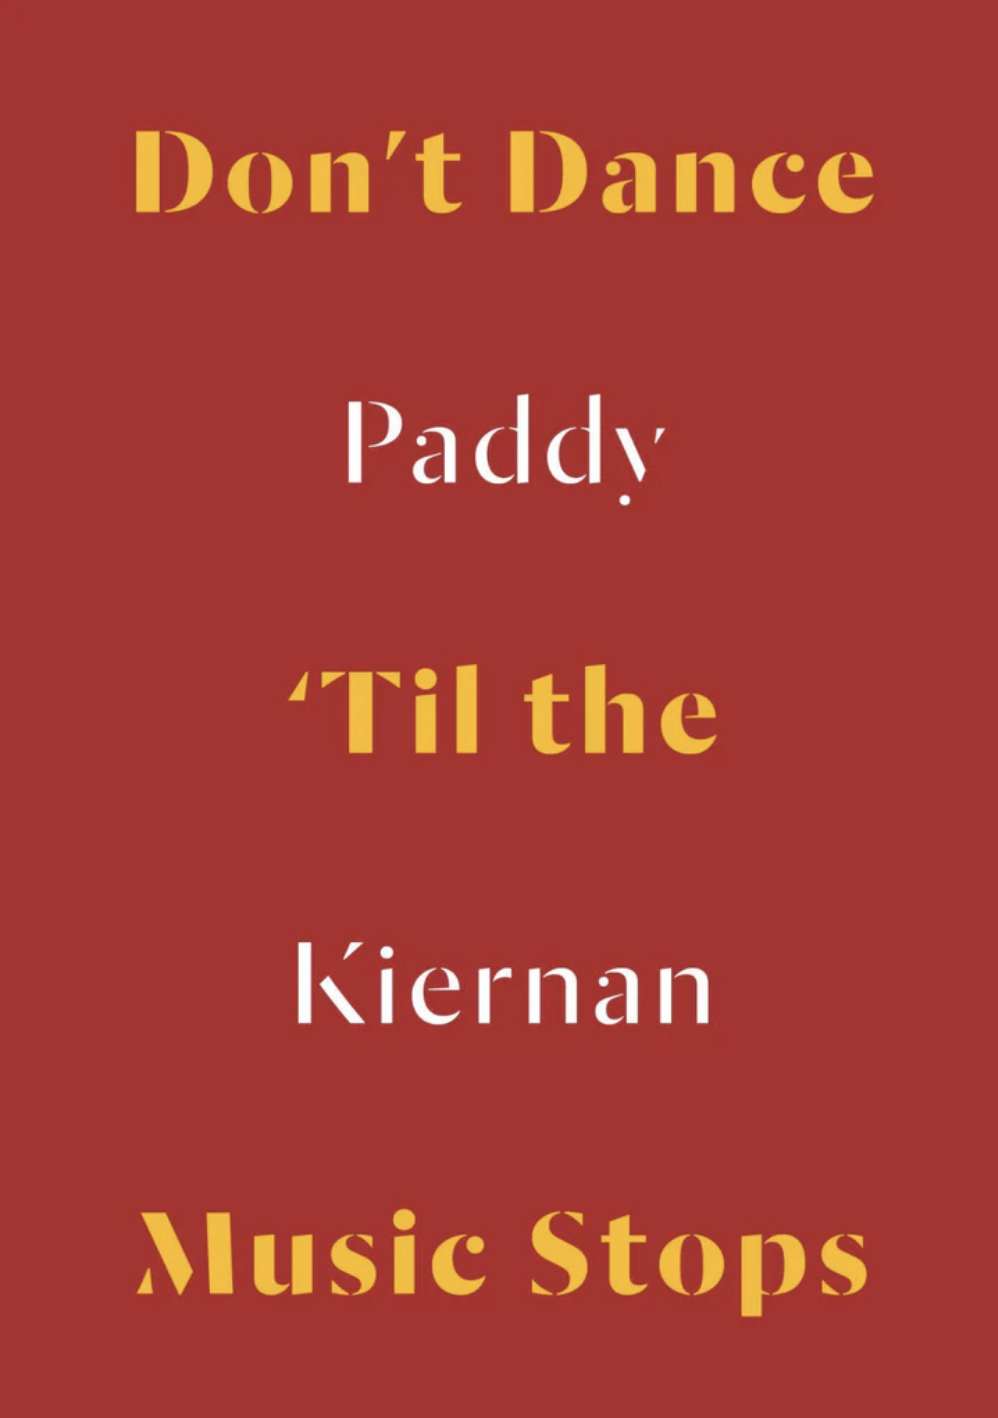 Don't Dance 'Til the Music Stops, Paddy Kiernan